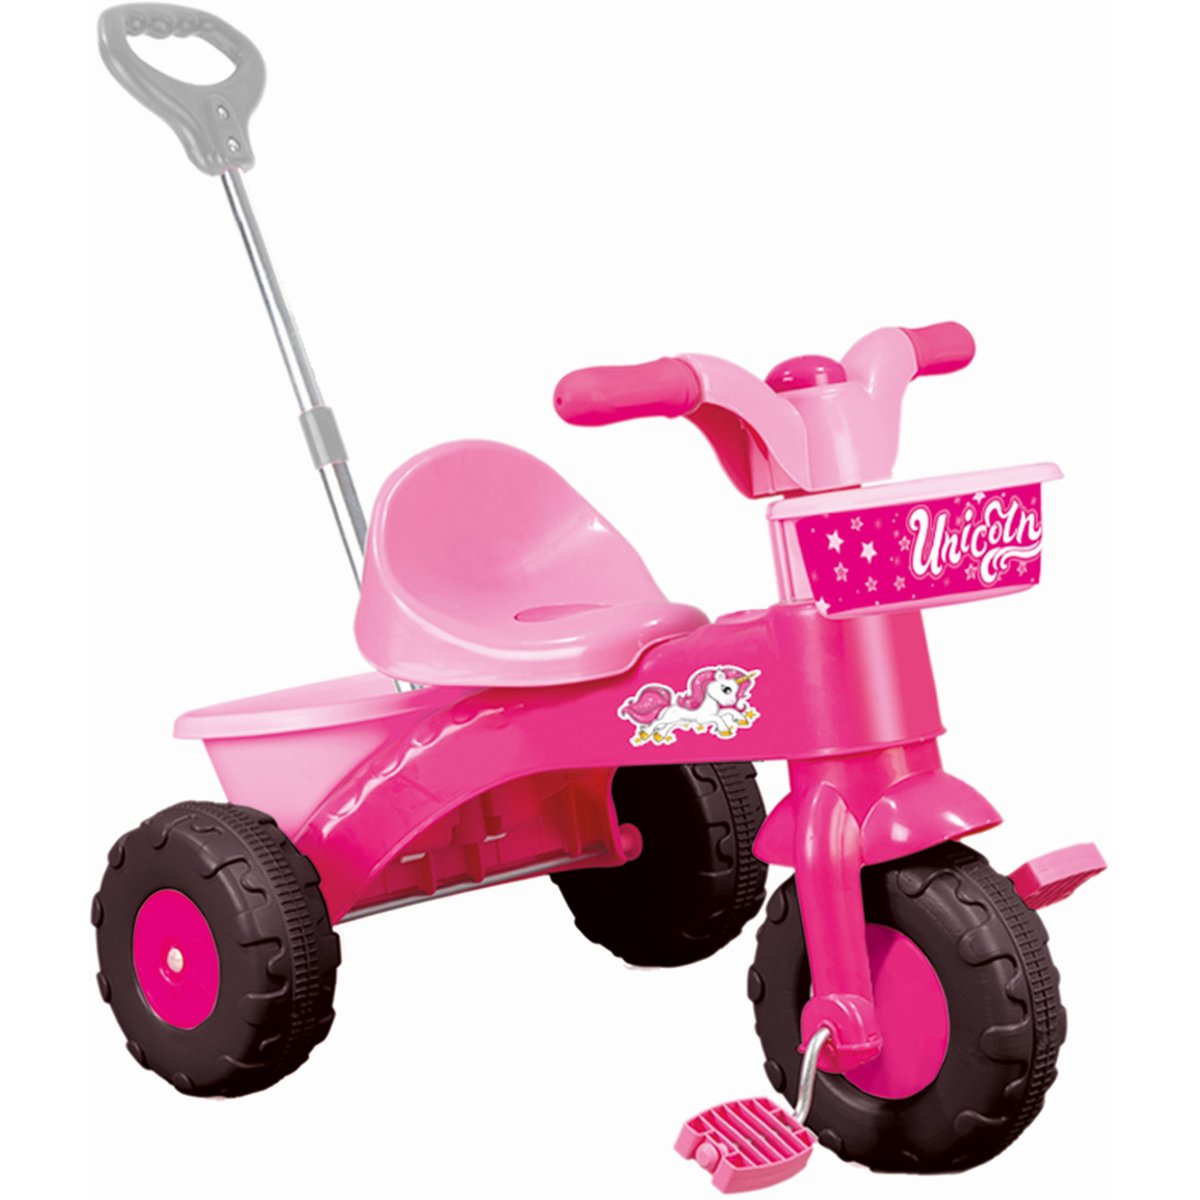 Prima mea tricicleta roz cu maner - Unicorn - Dolu